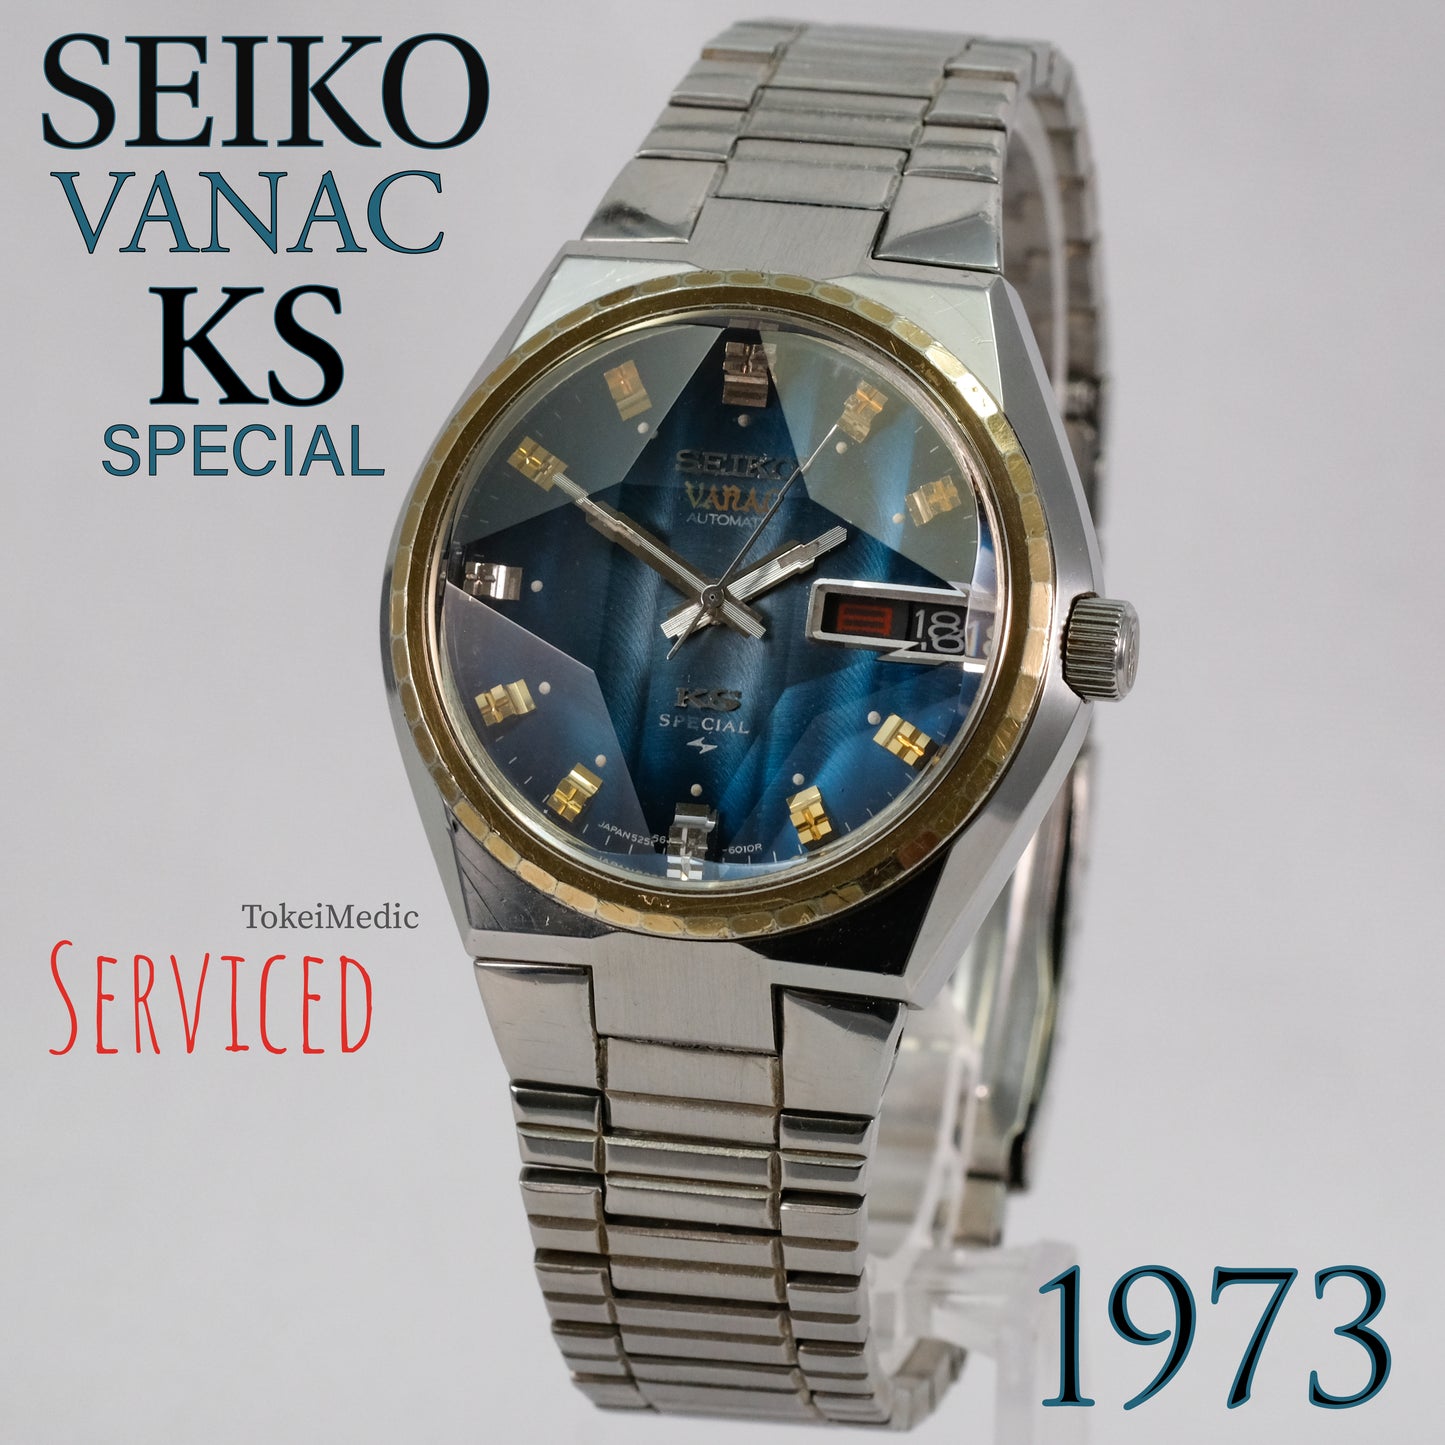 1973 Seiko Vanac KS Special 5256-6010